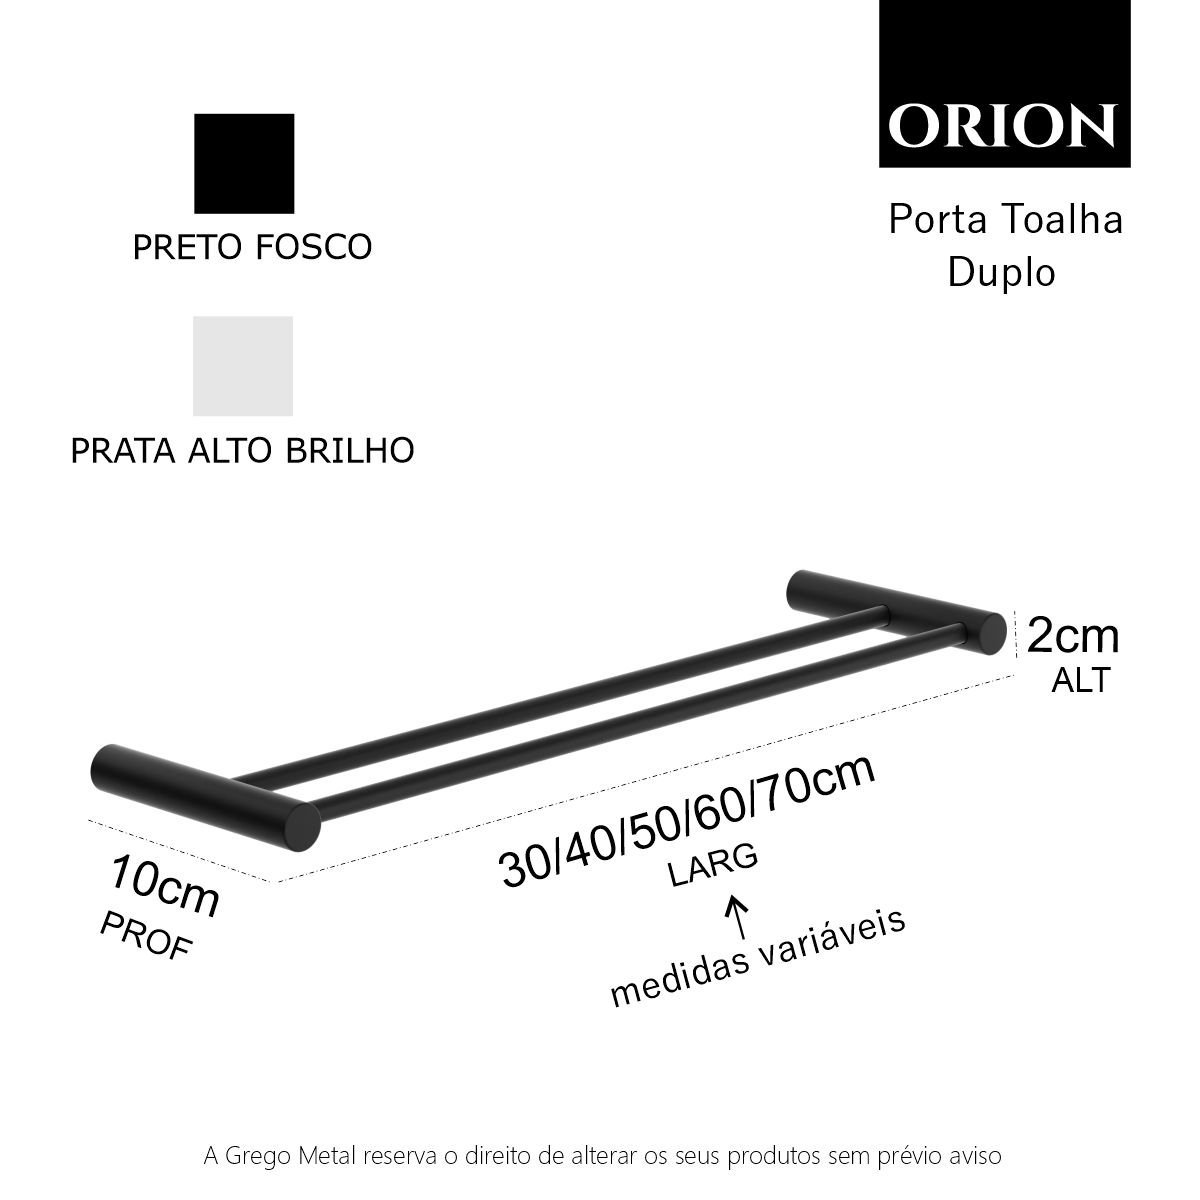 Porta Toalha Duplo para Banheiro Toalheiro 30cm Suporte Redondo Barra Grego Metal Preto Fosco Orion - 5